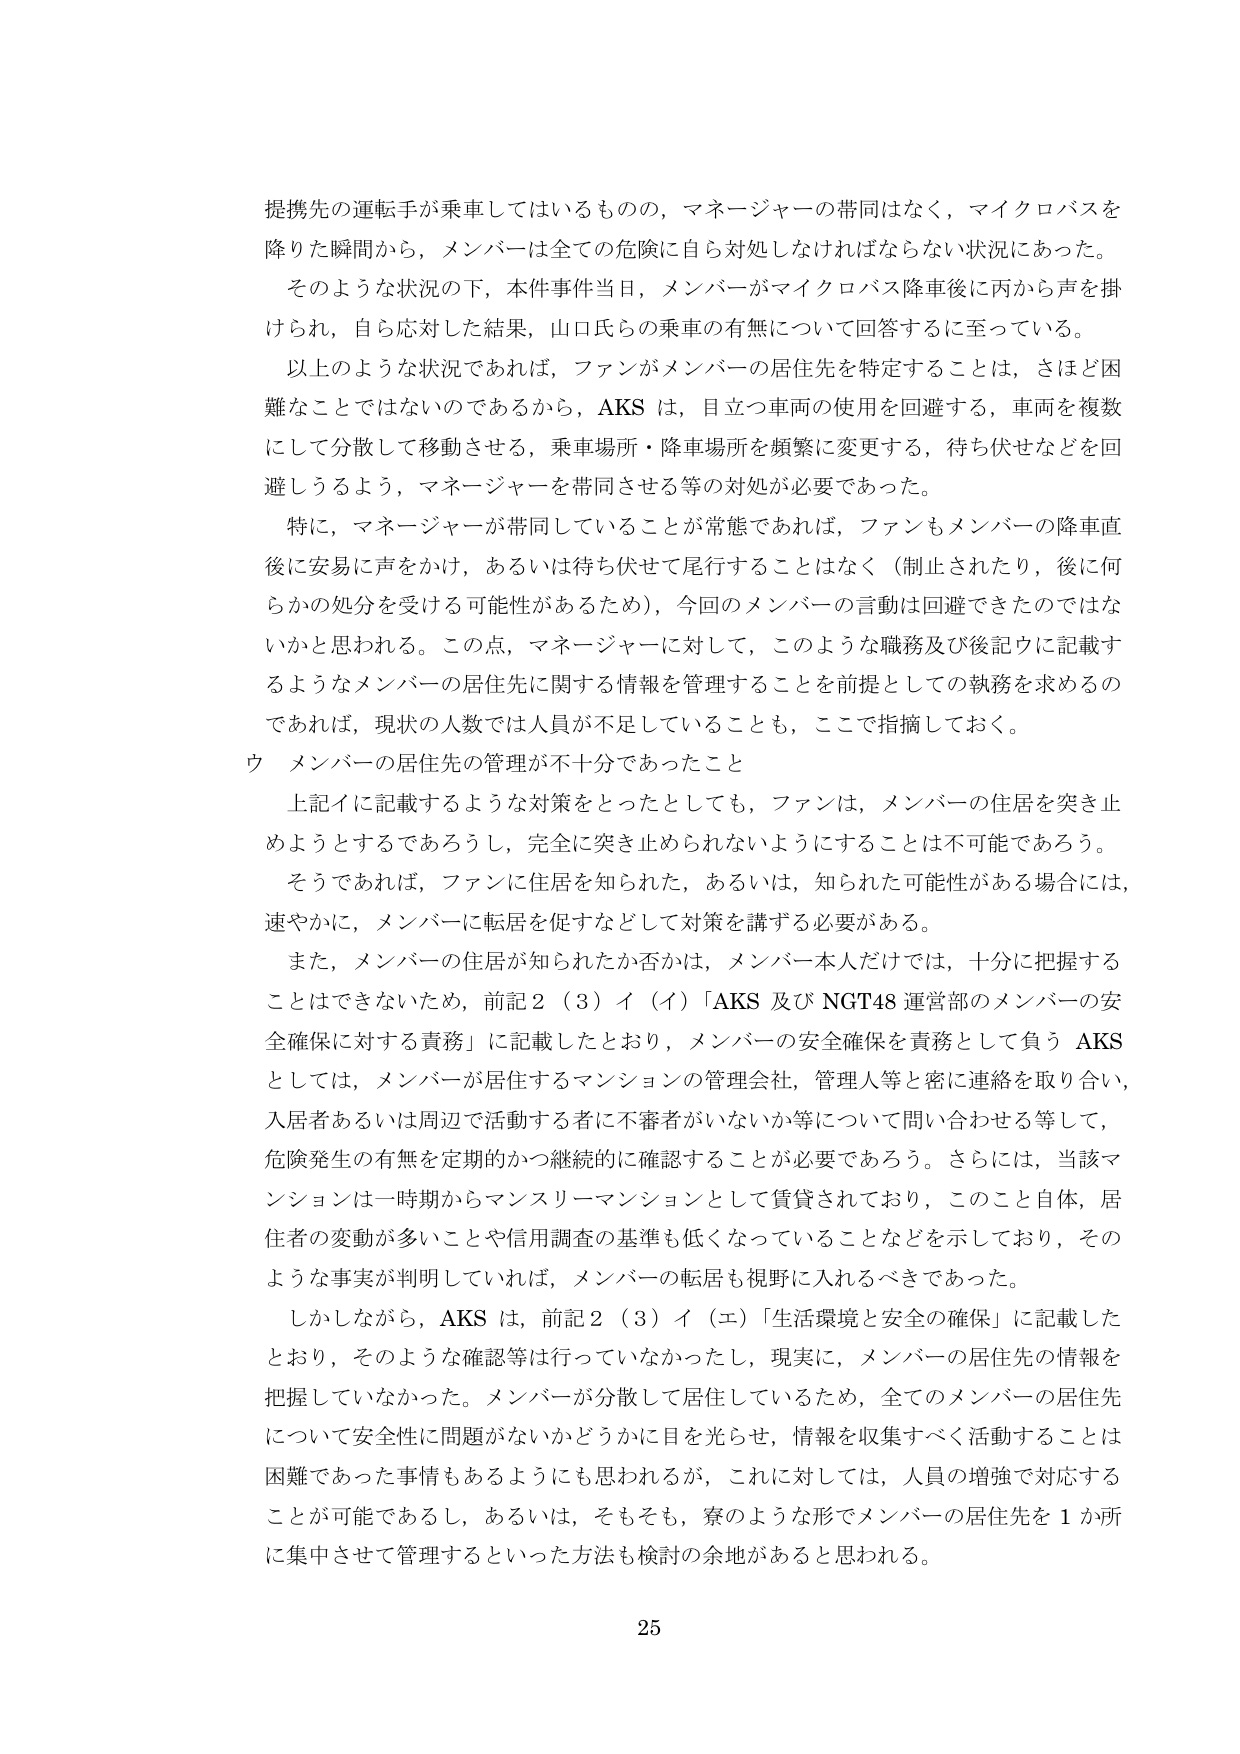 NGT48第三者委員会調査報告書27